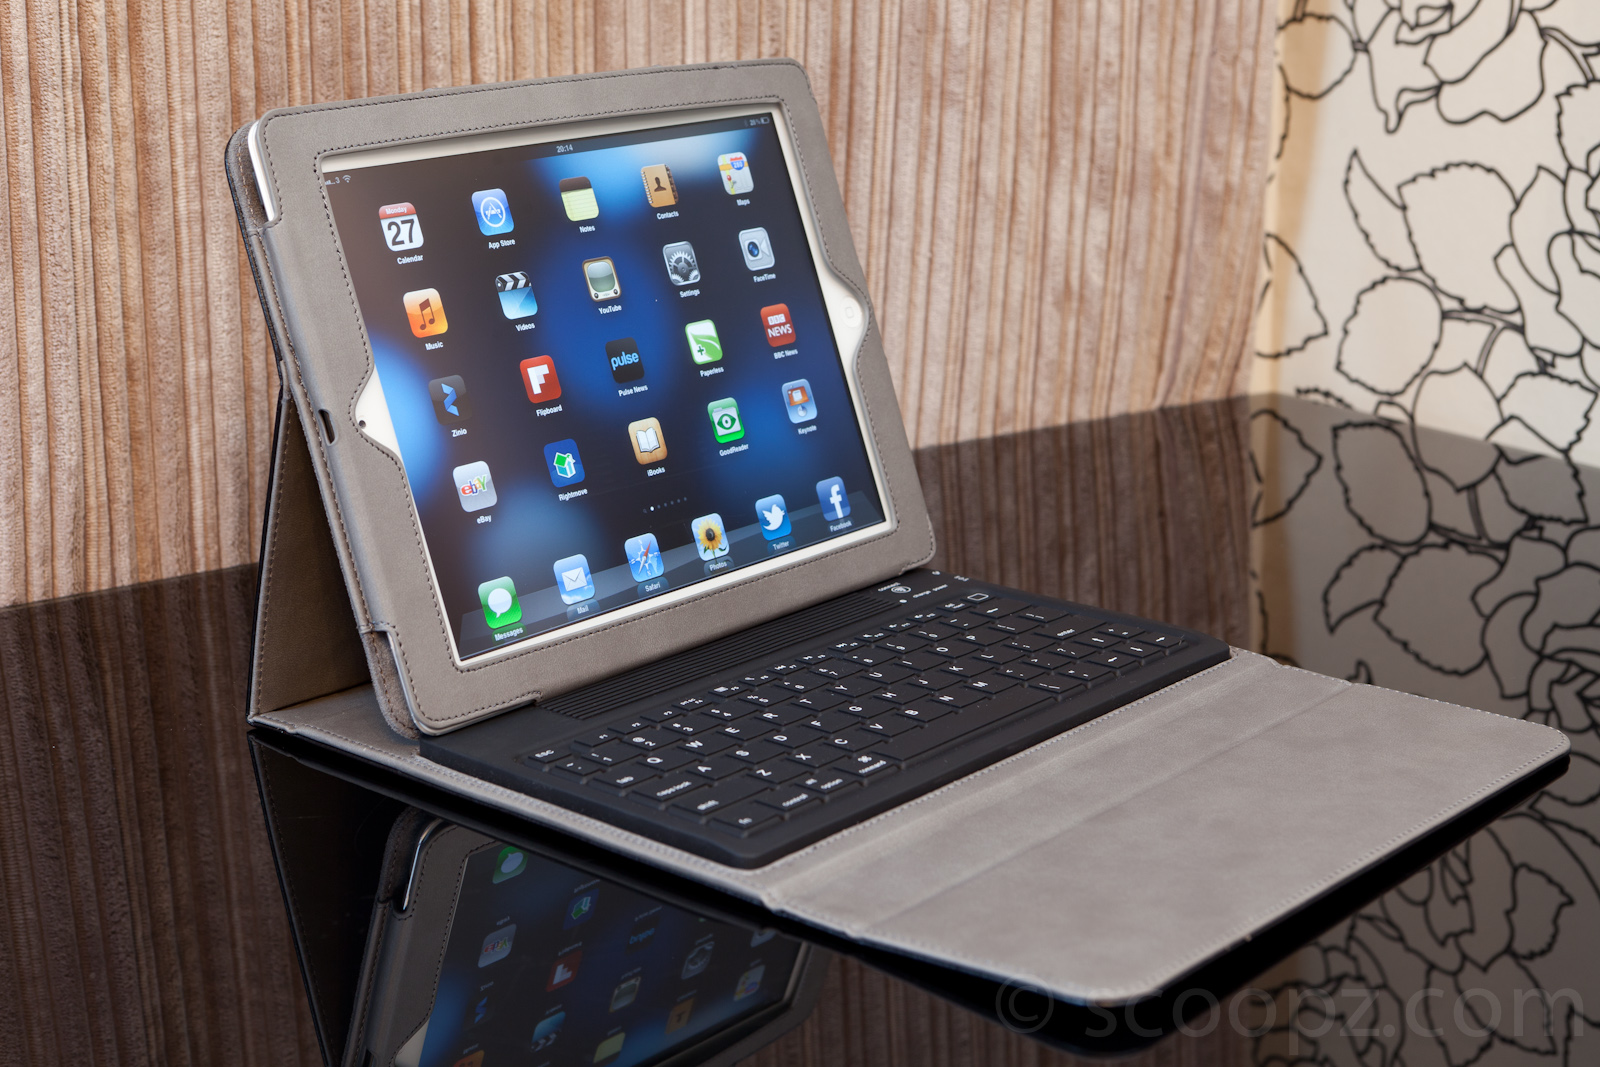 KeyCase iPad 2 Folio Deluxe with Bluetooth Keyboard ...